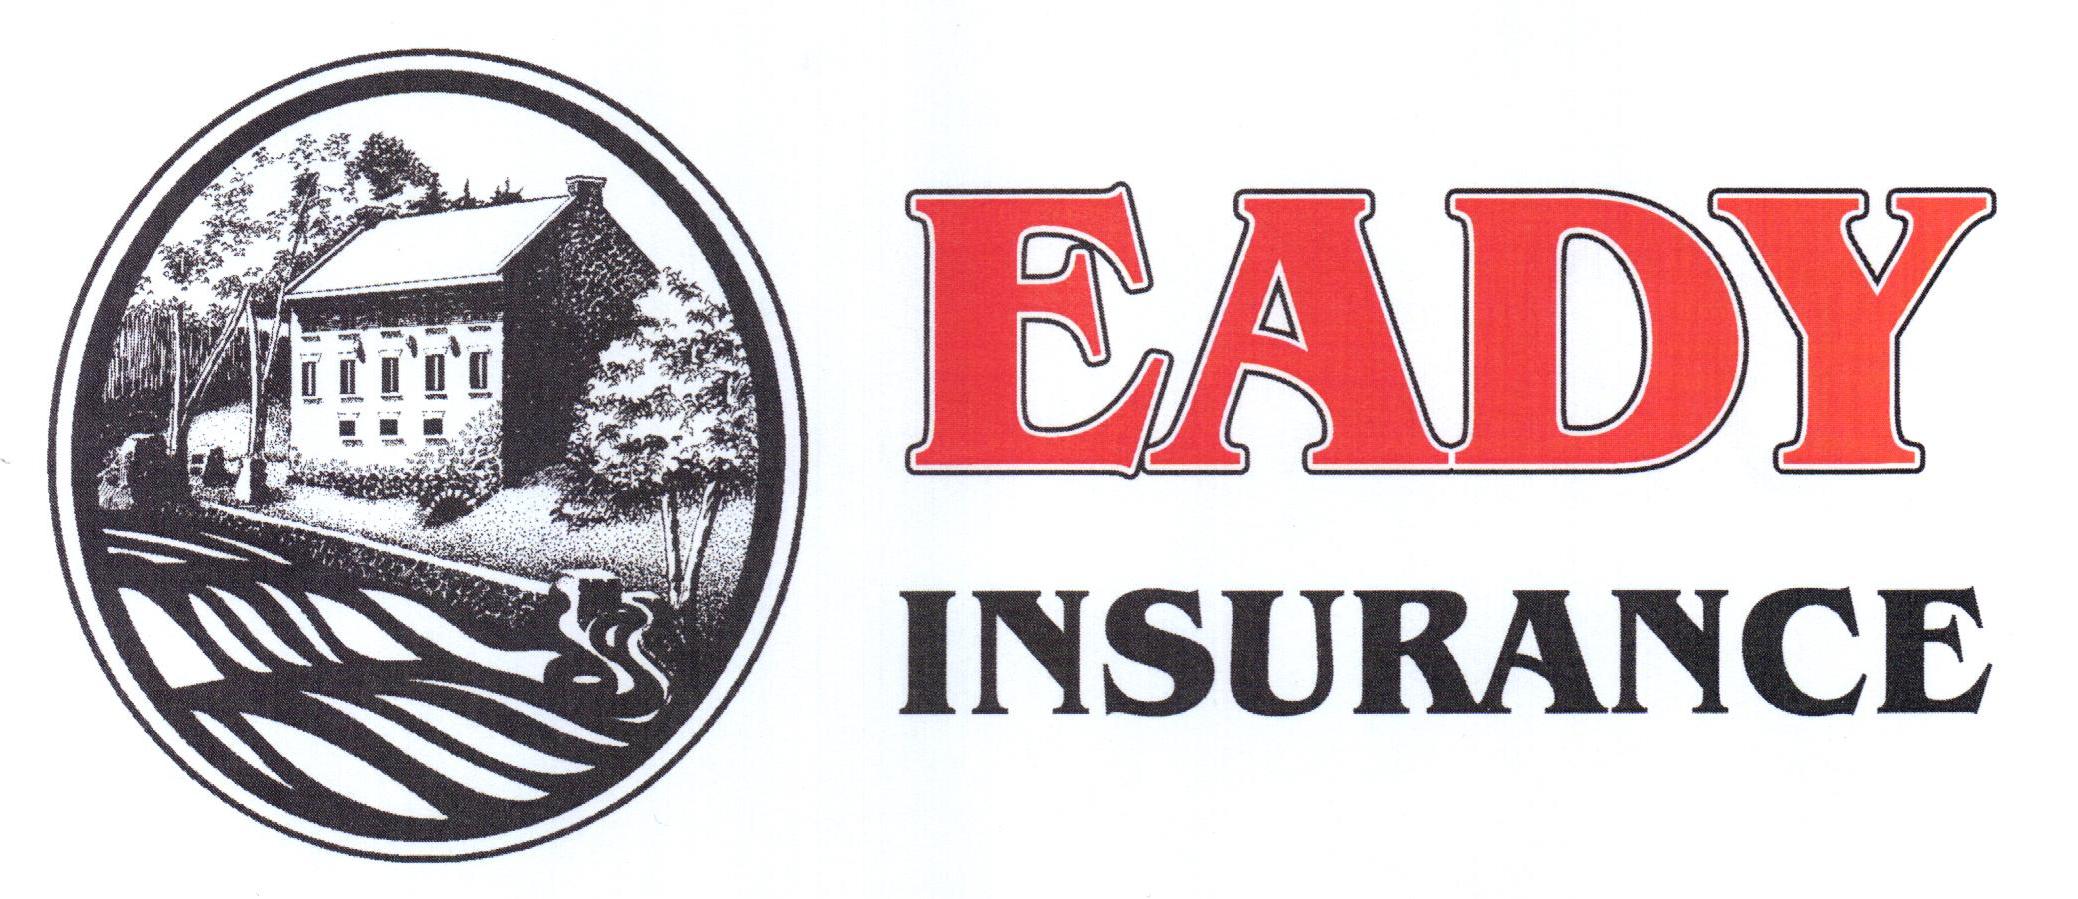 Eady Insurance Inc.